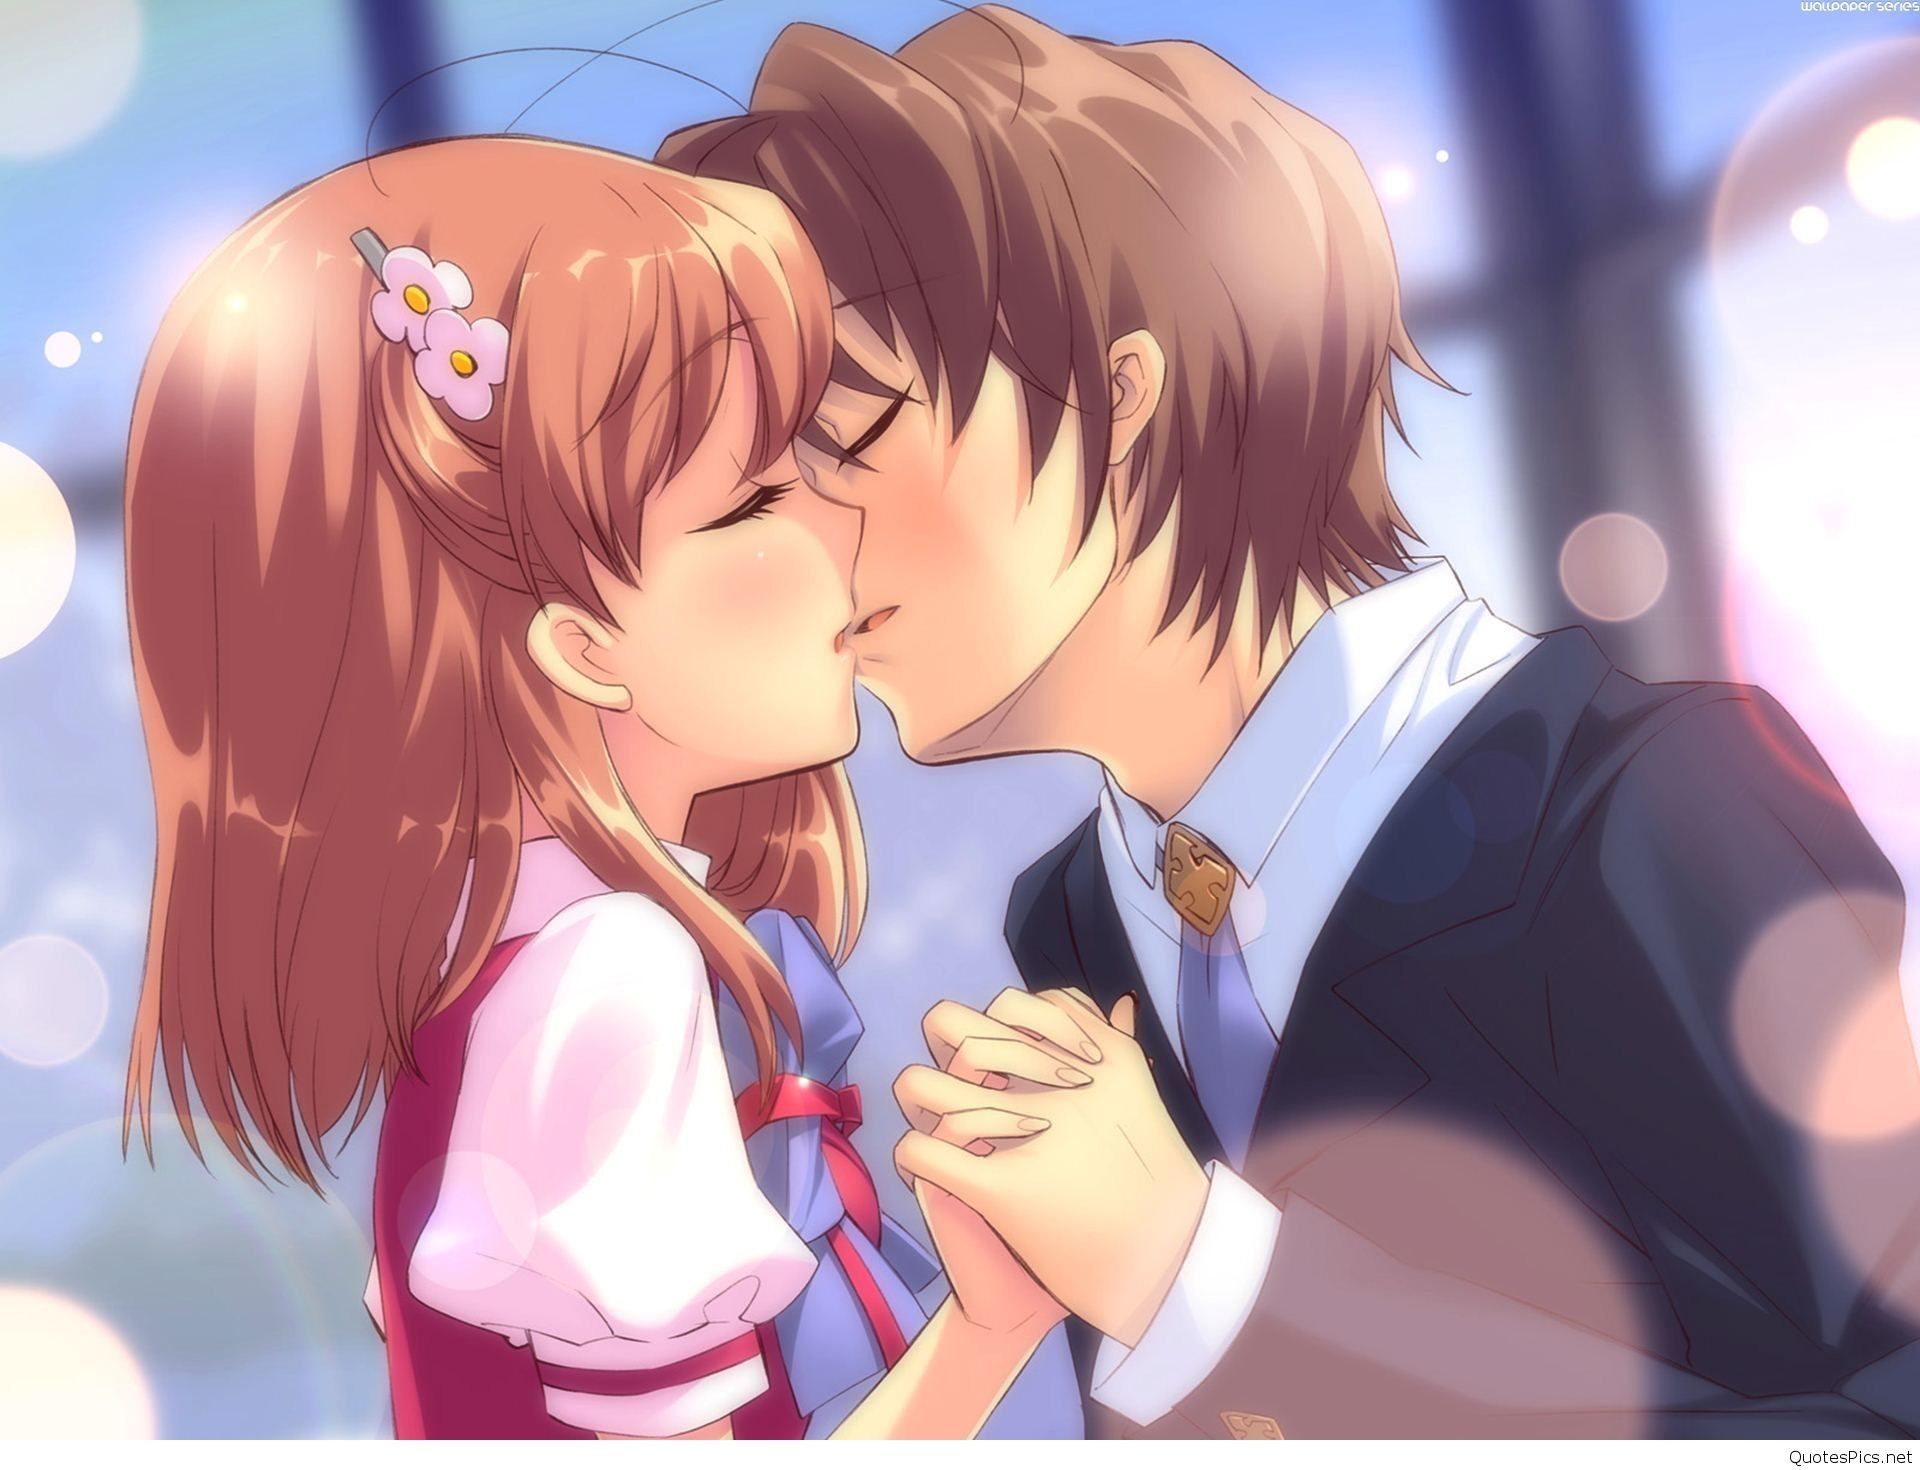 Sweet Couple Anime Wallpaper (más de 77 imágenes)